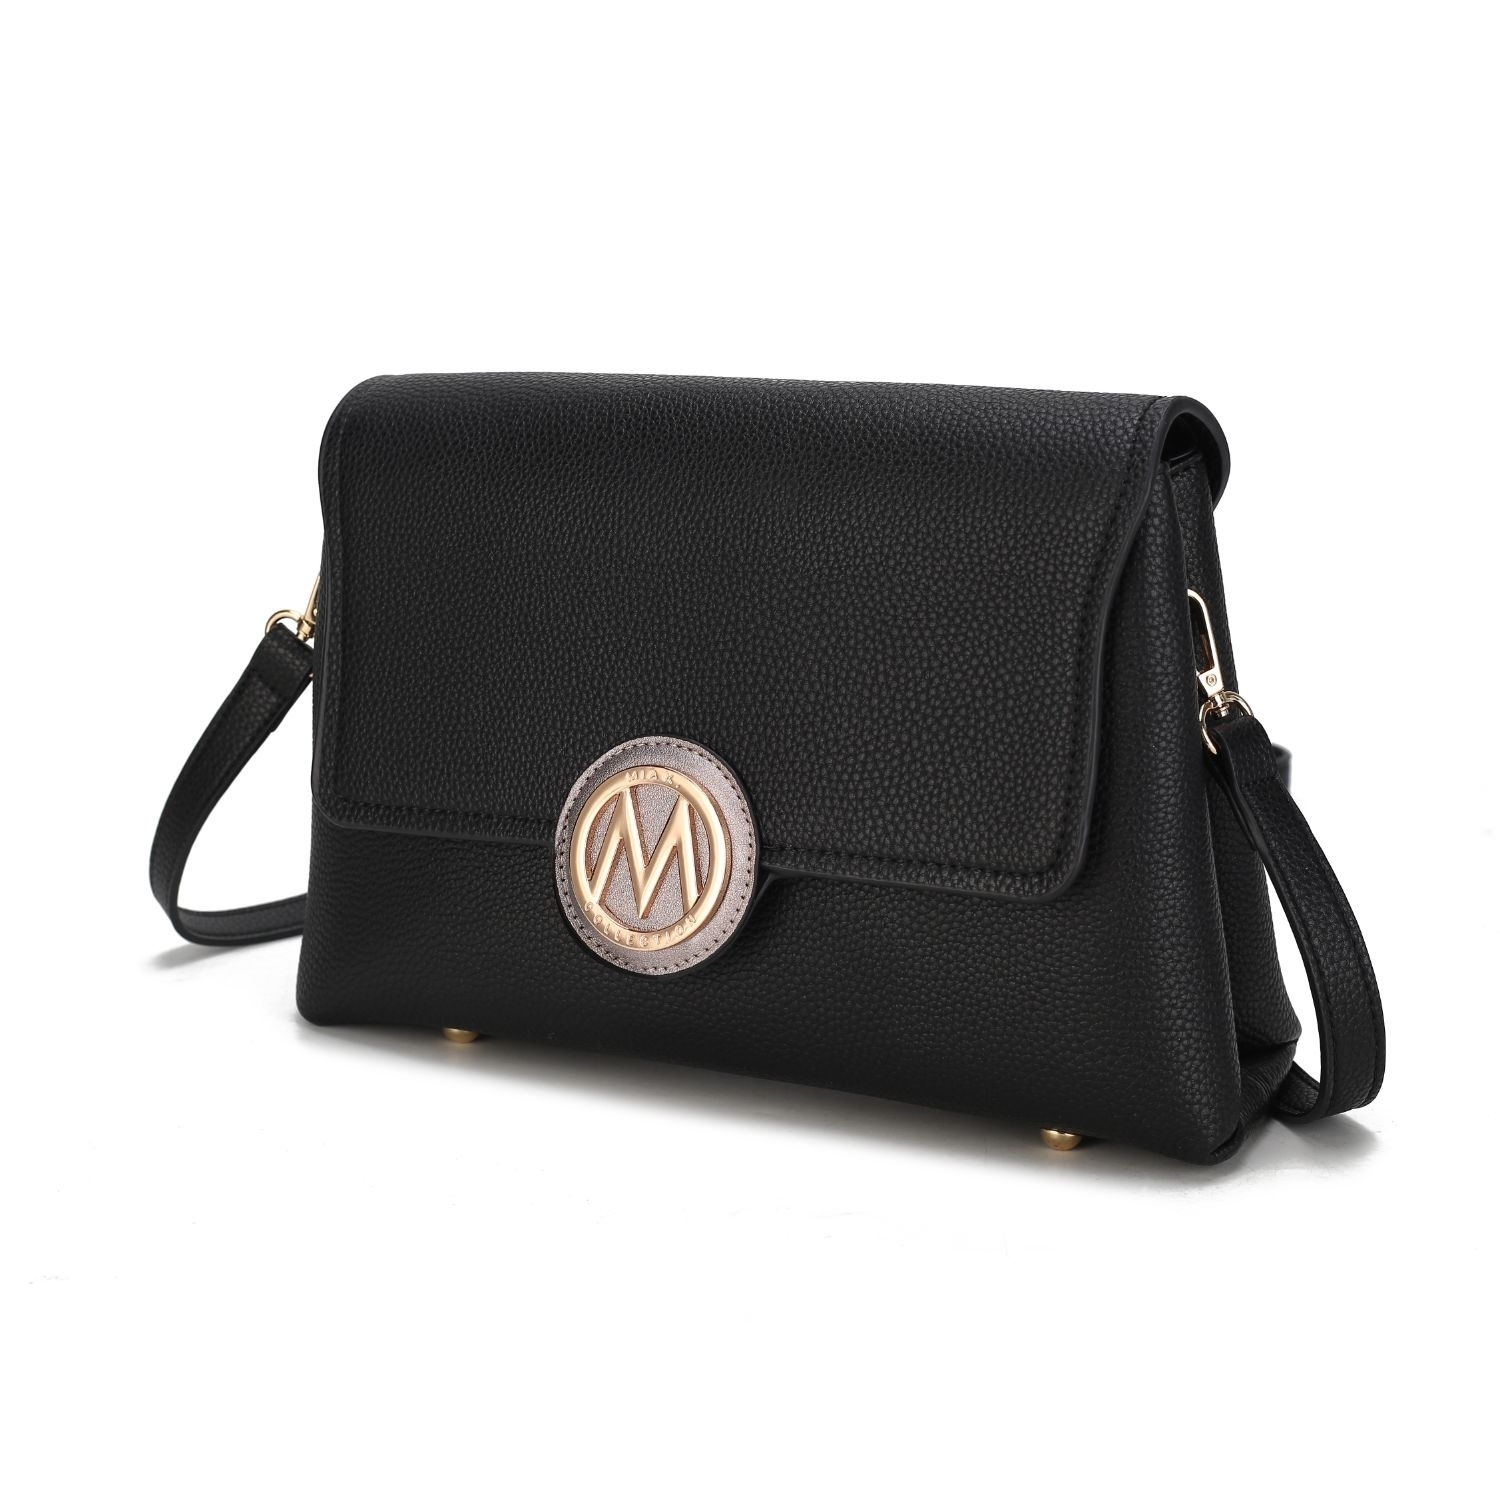 MKF Collection Johanna Multi Compartment Crossbody Handbag By Mia K - Black-brown